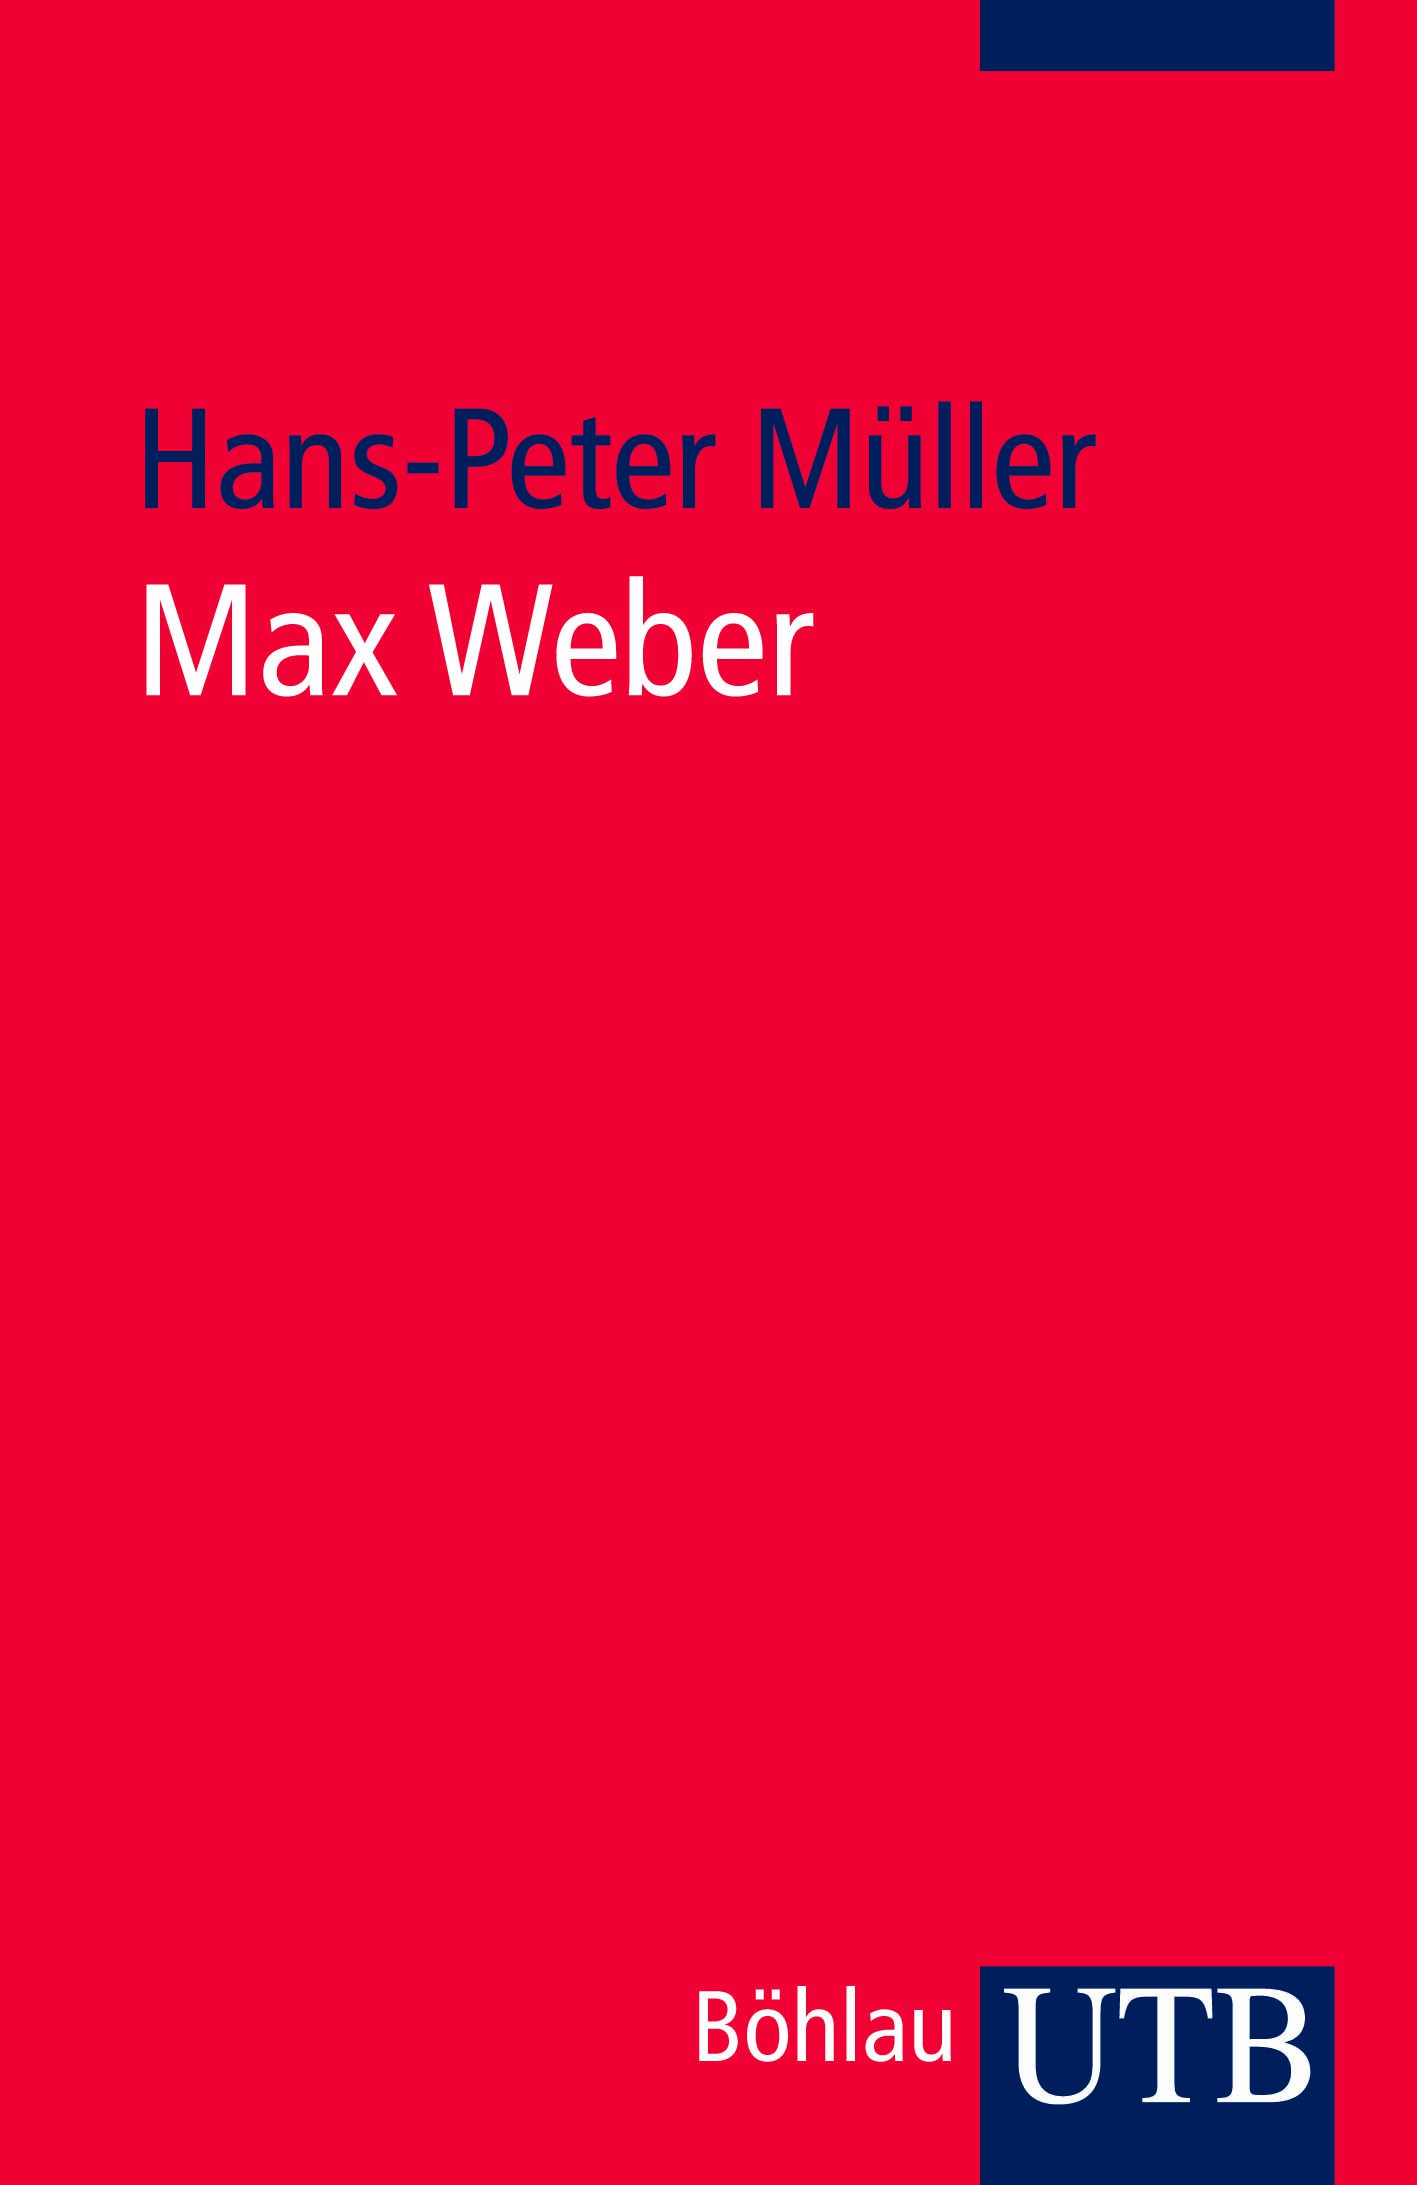 2007 Weber